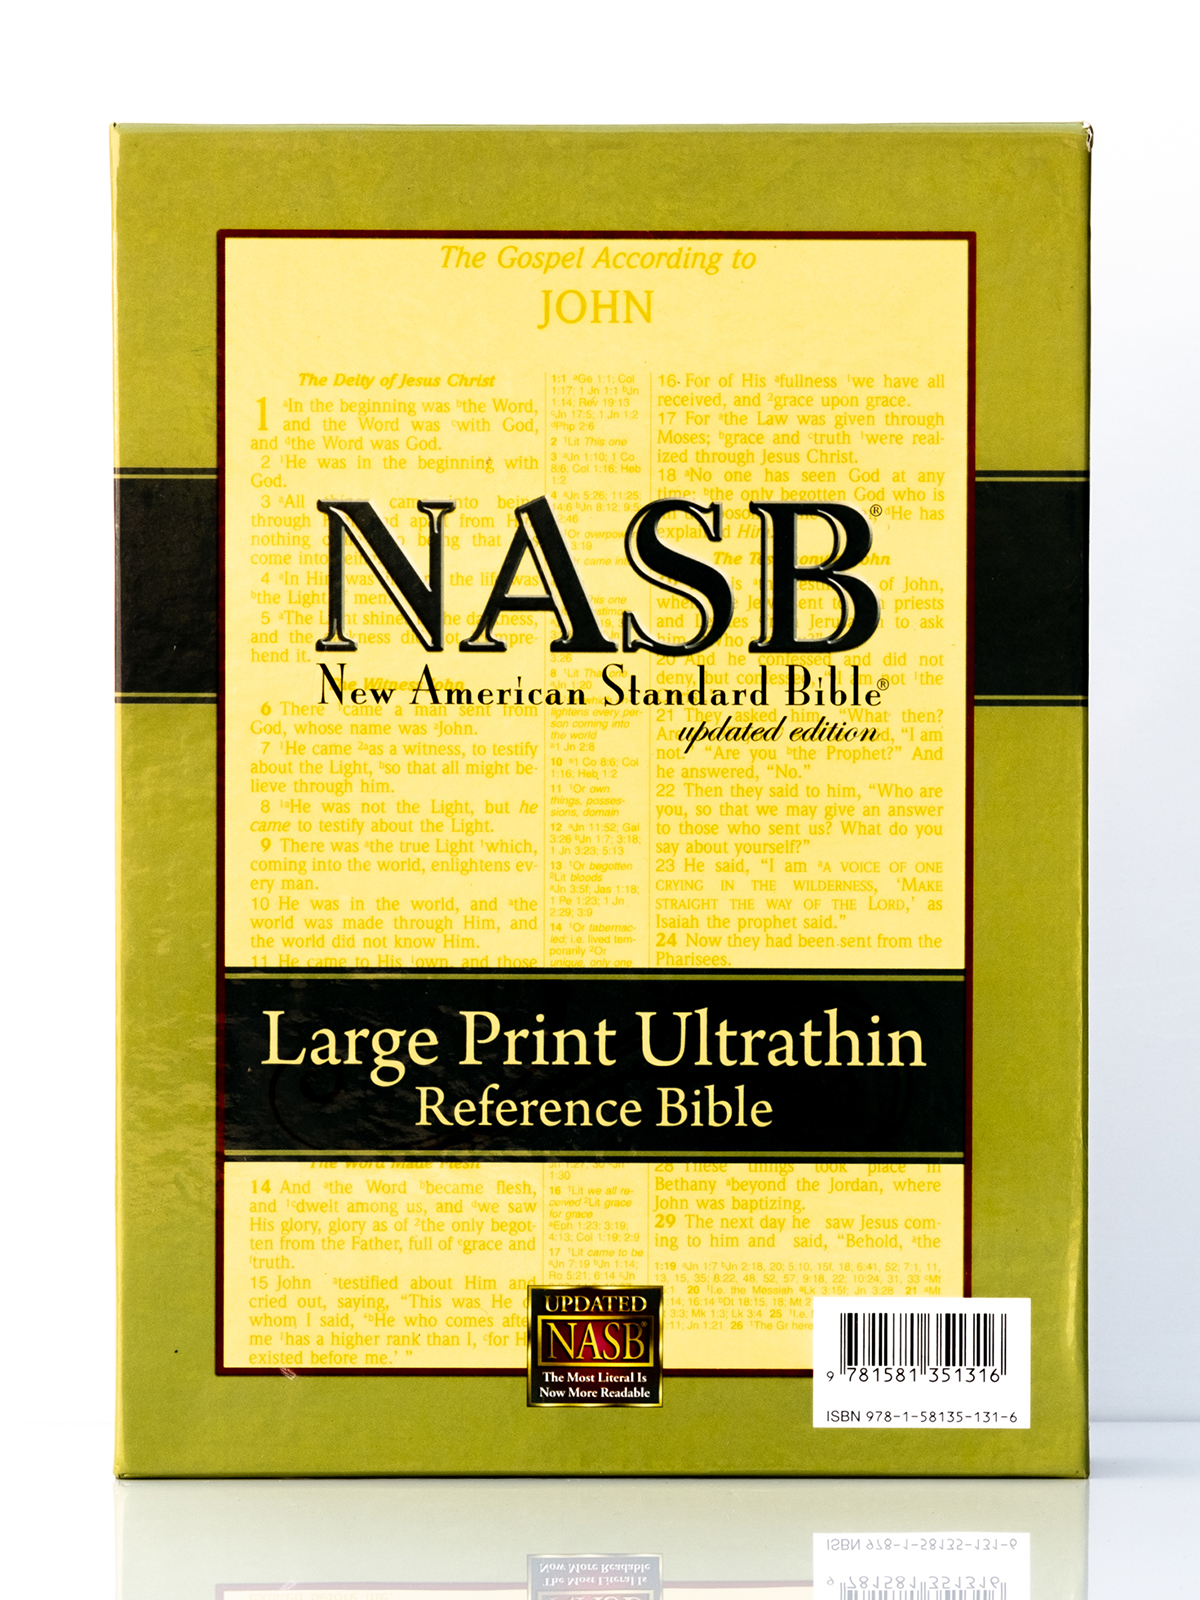 NASB Large Print Ultrathin Bible Box Cover